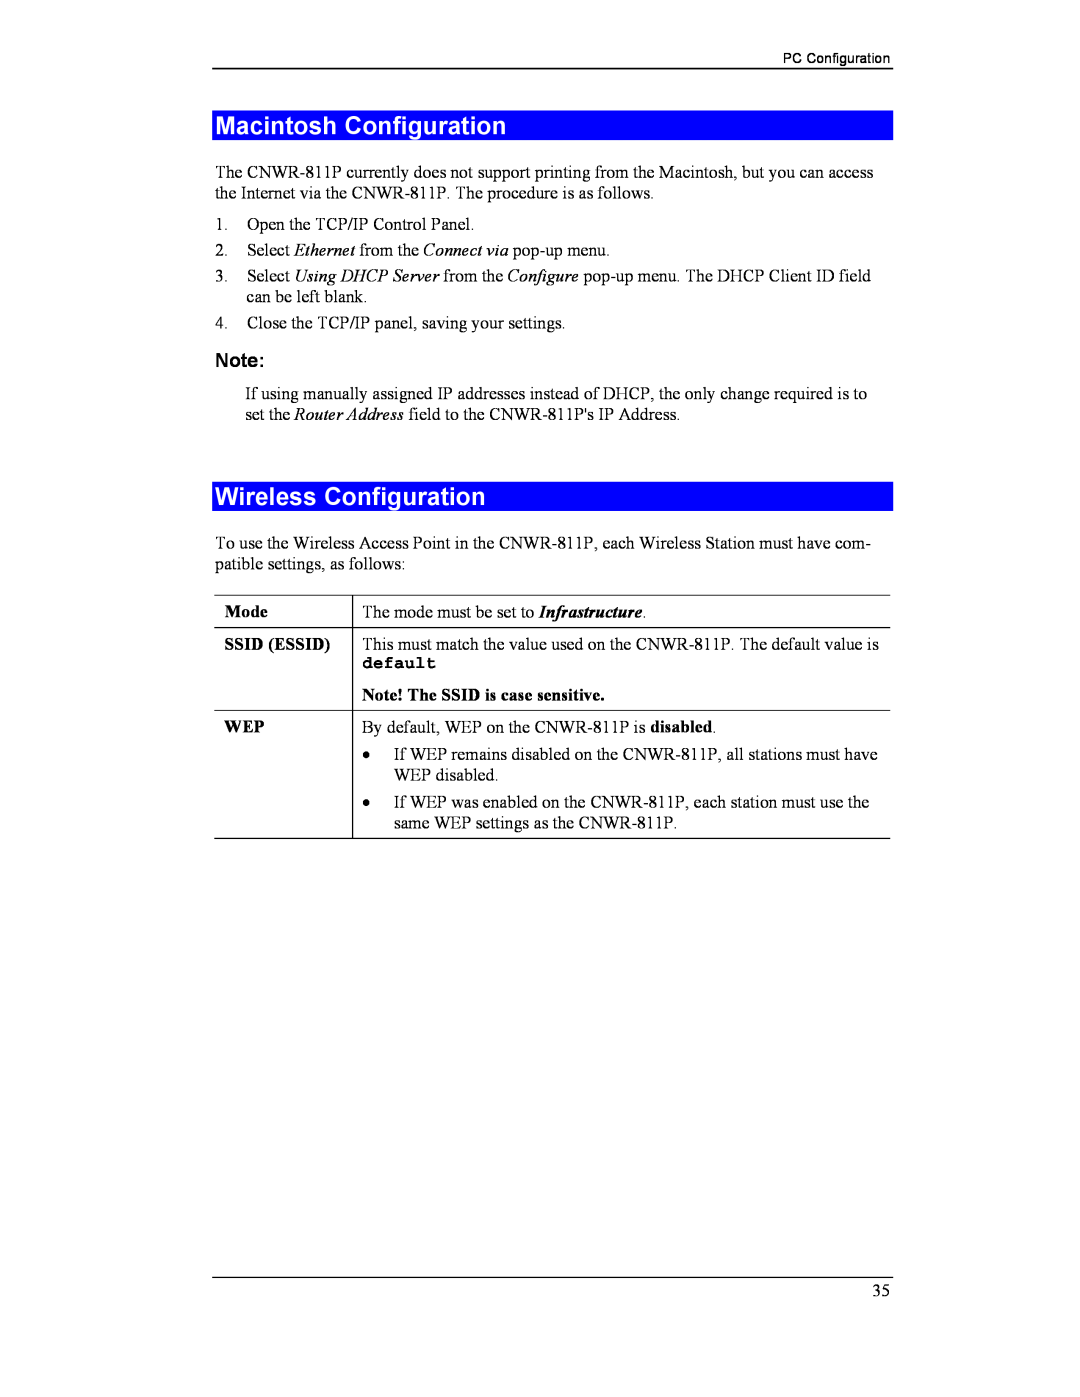 CNET CNWR-811P manual Macintosh Configuration, Wireless Configuration, default 